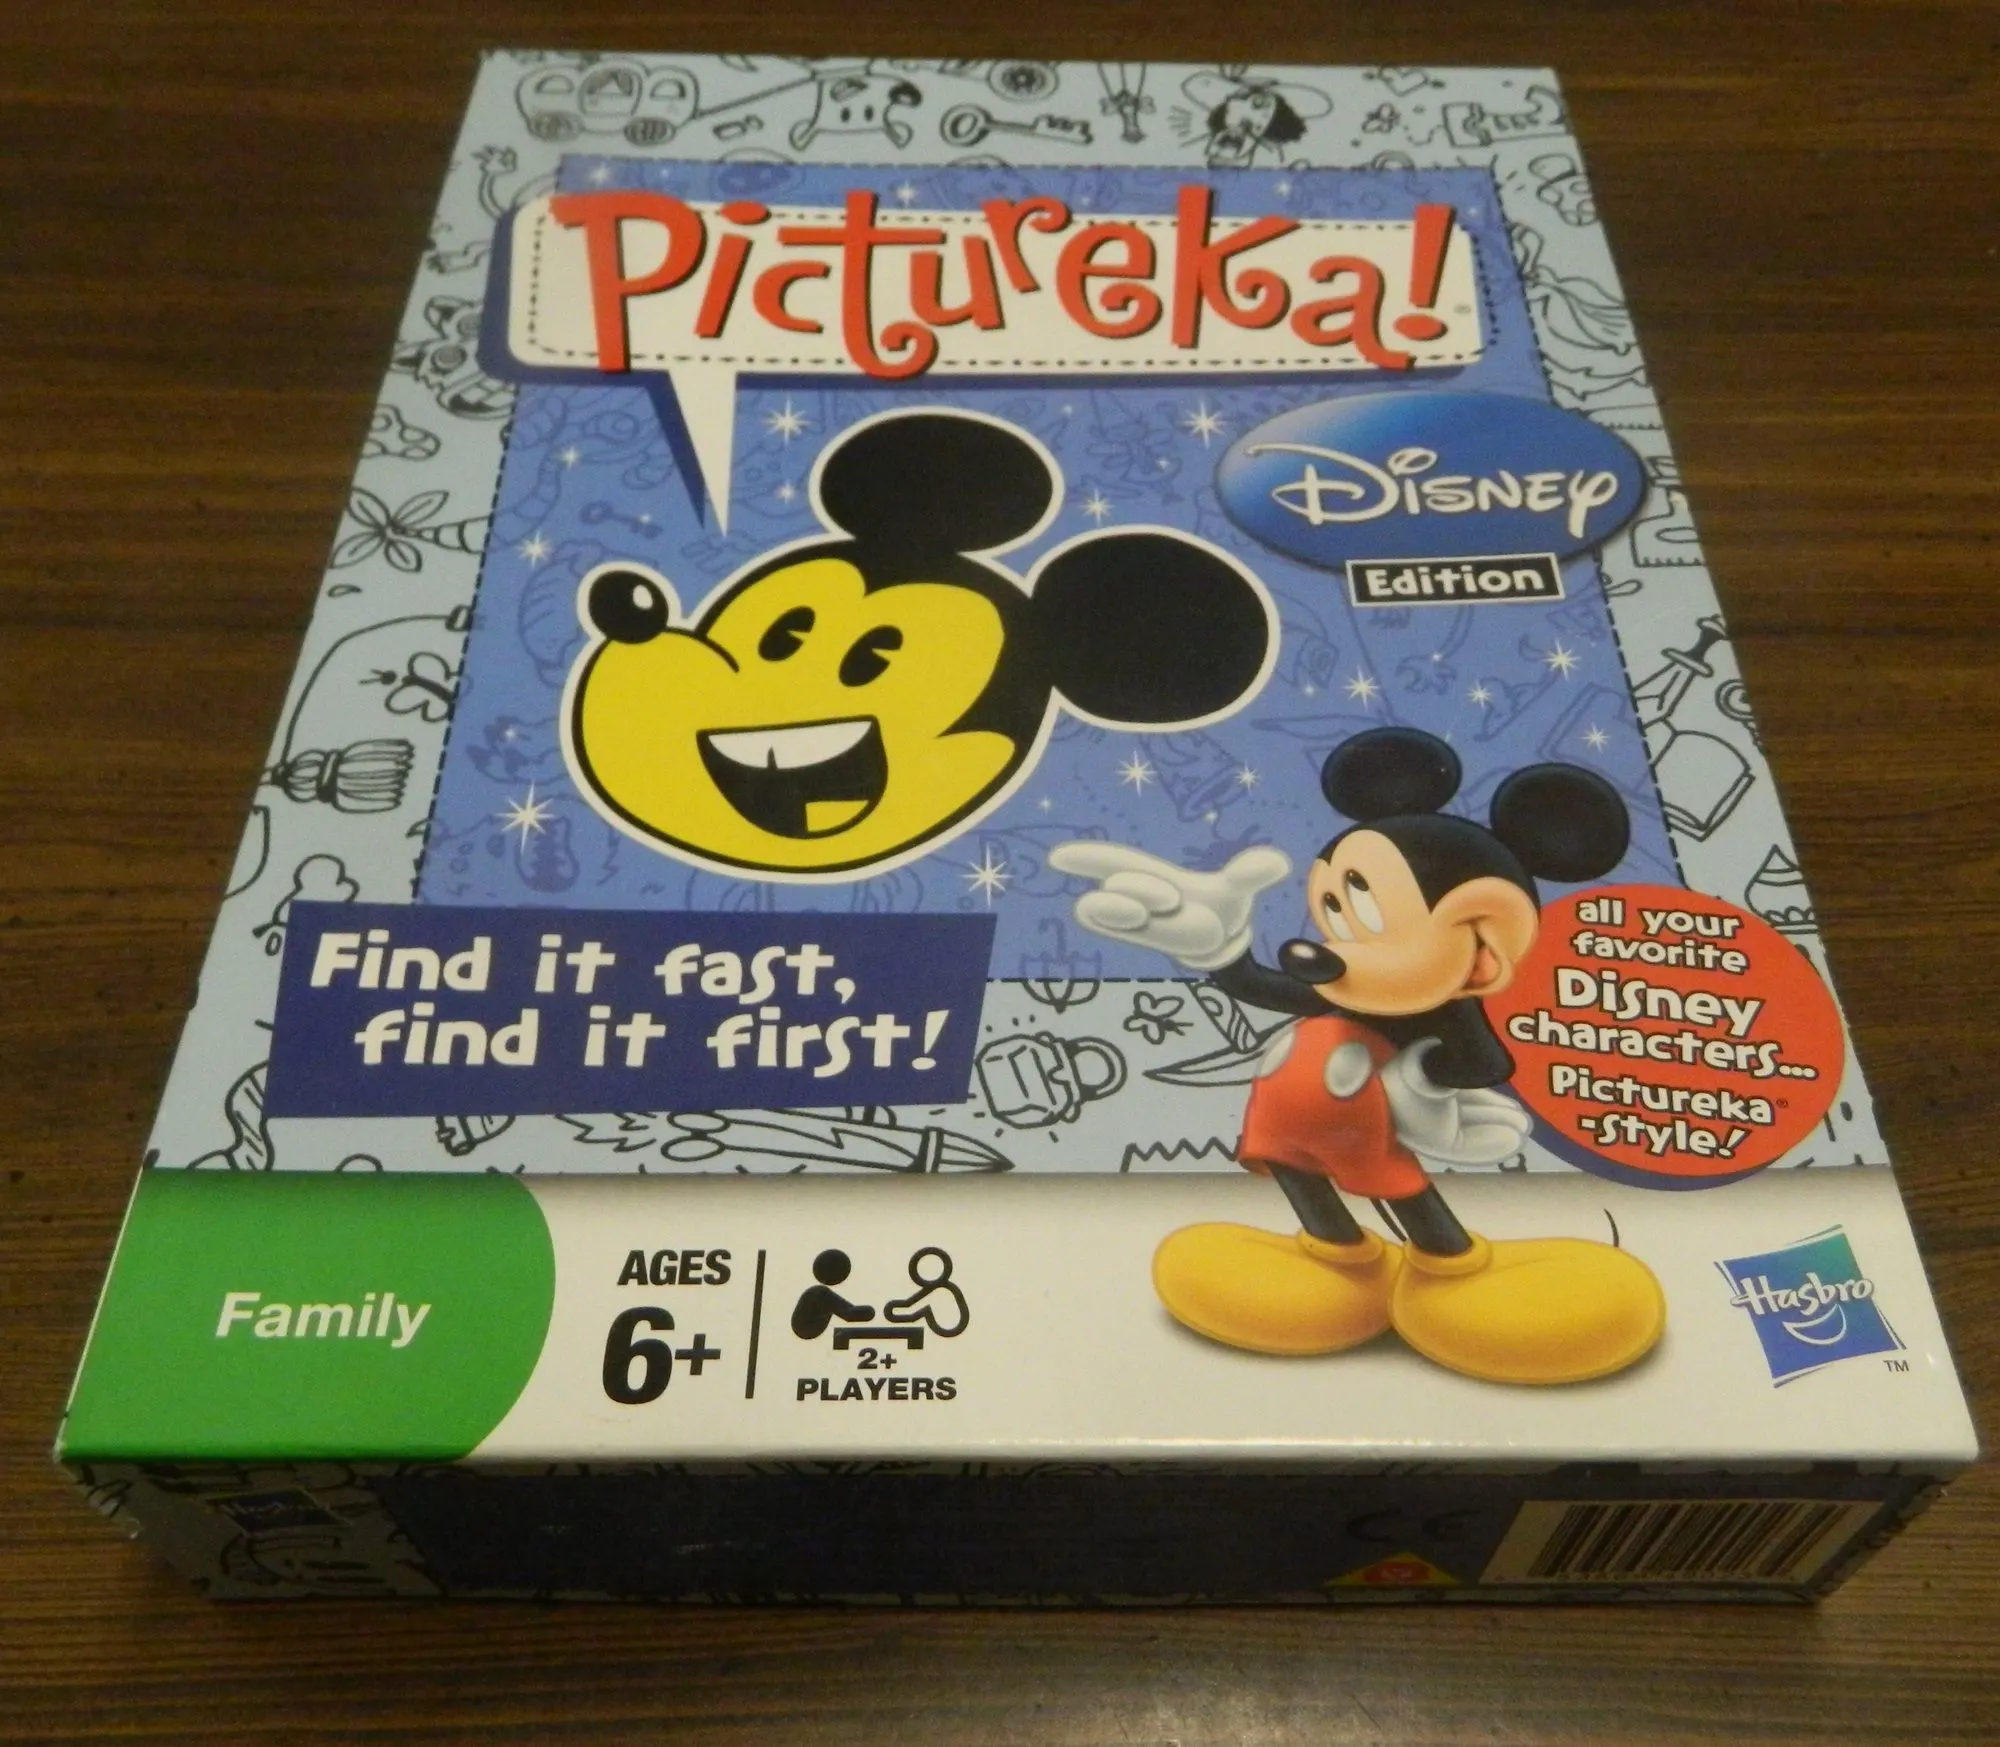 Box for Pictureka! Disney Edition